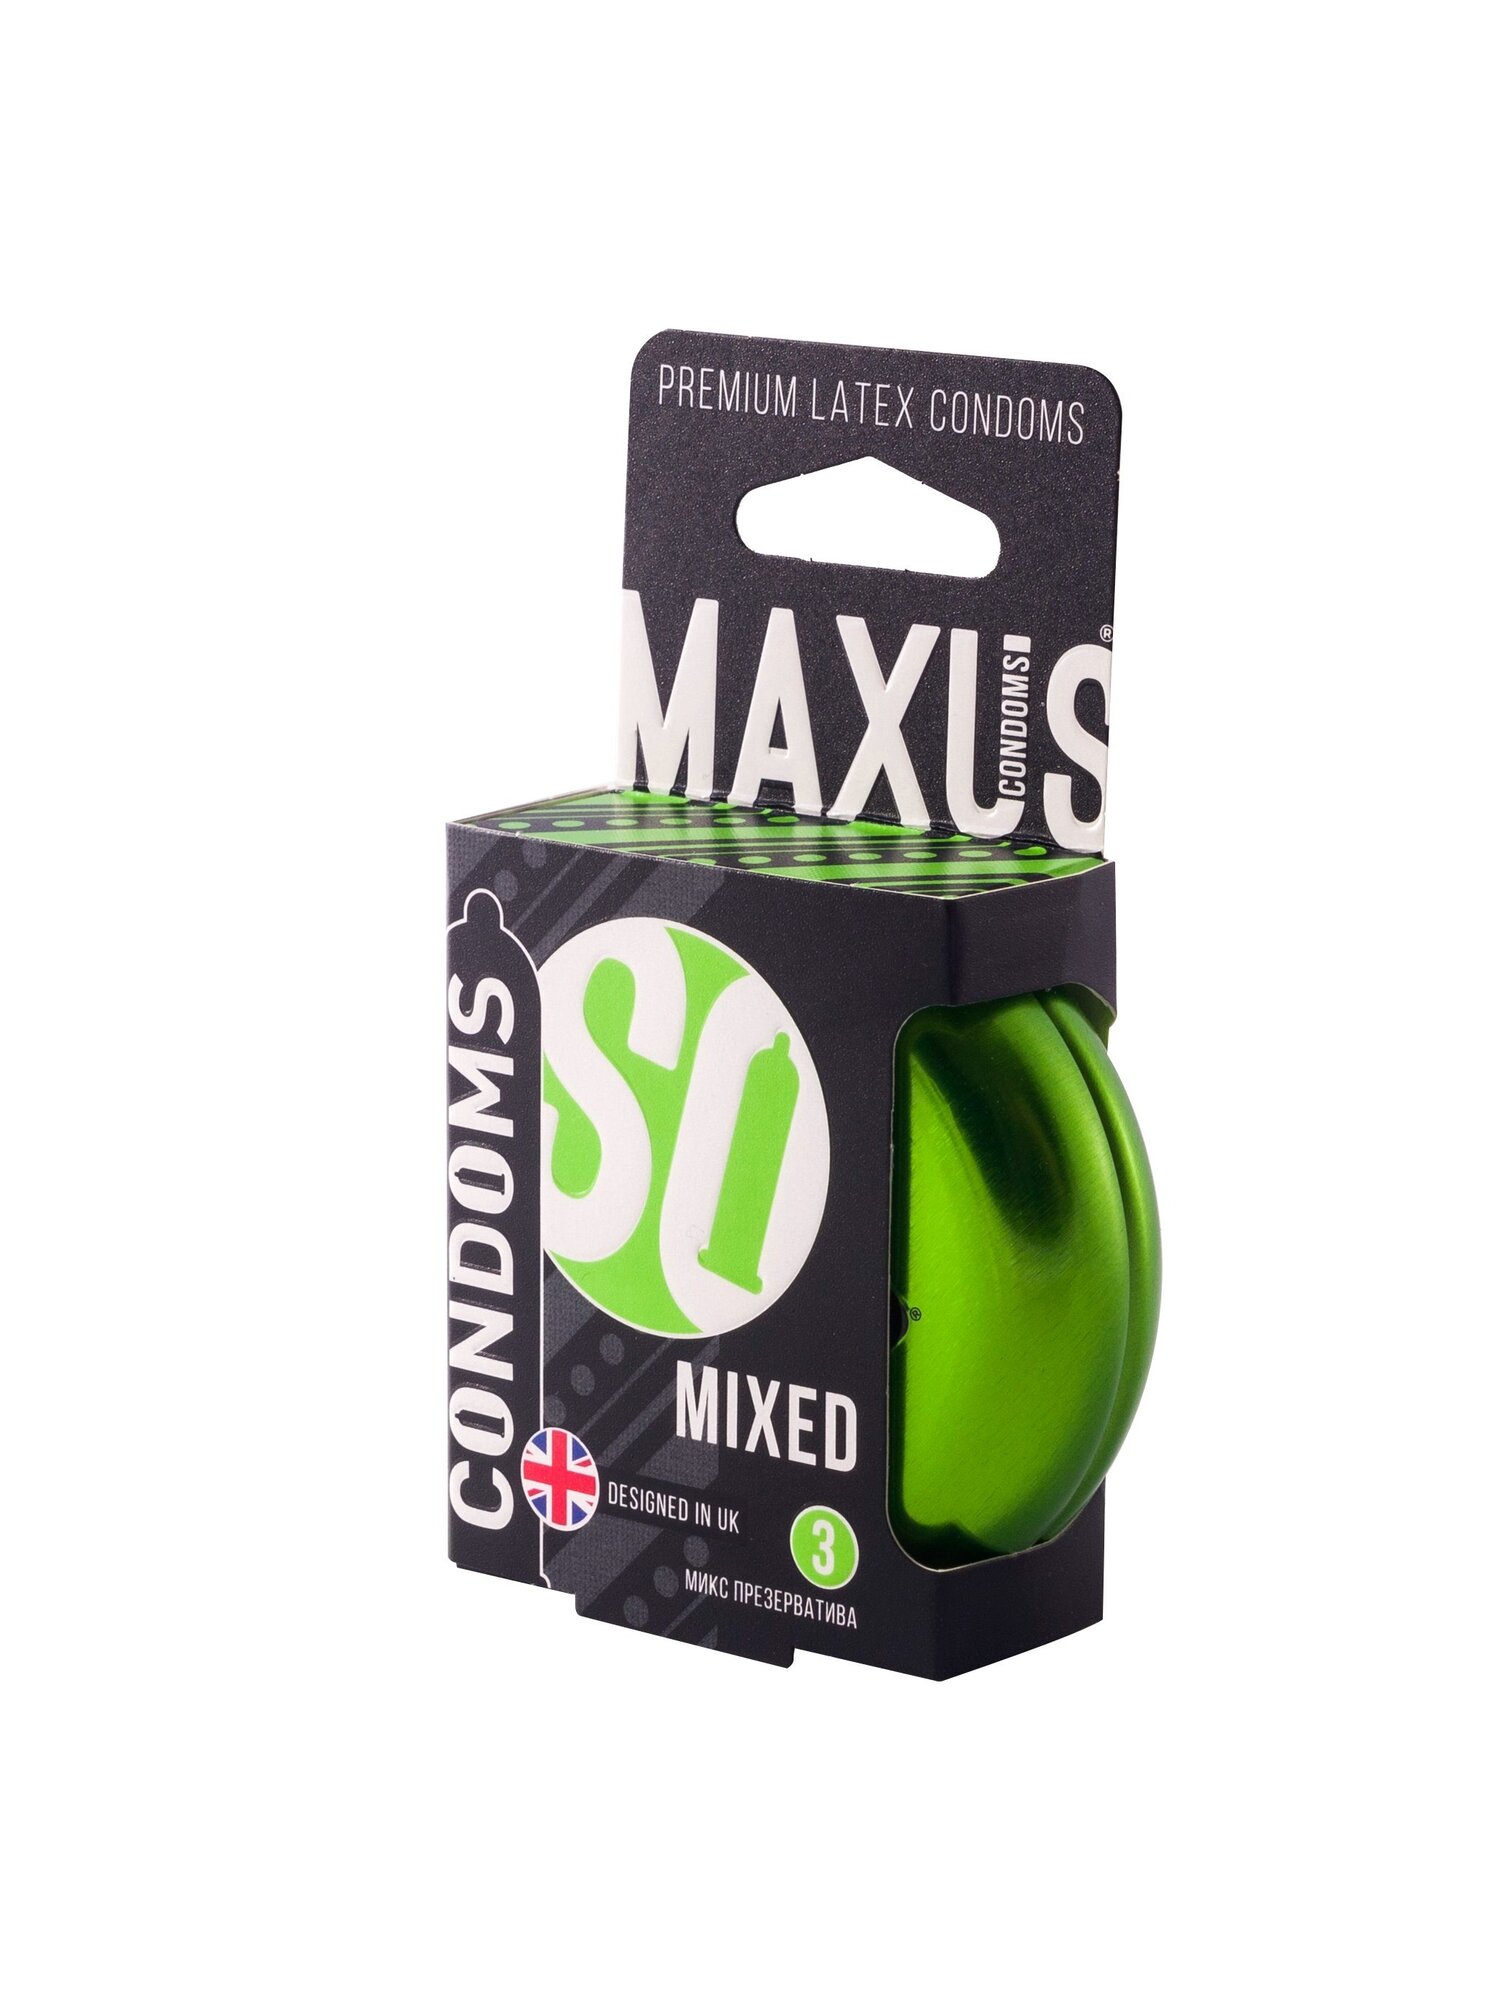 Презервативы в железном кейсе набор MAXUS Mixed №3